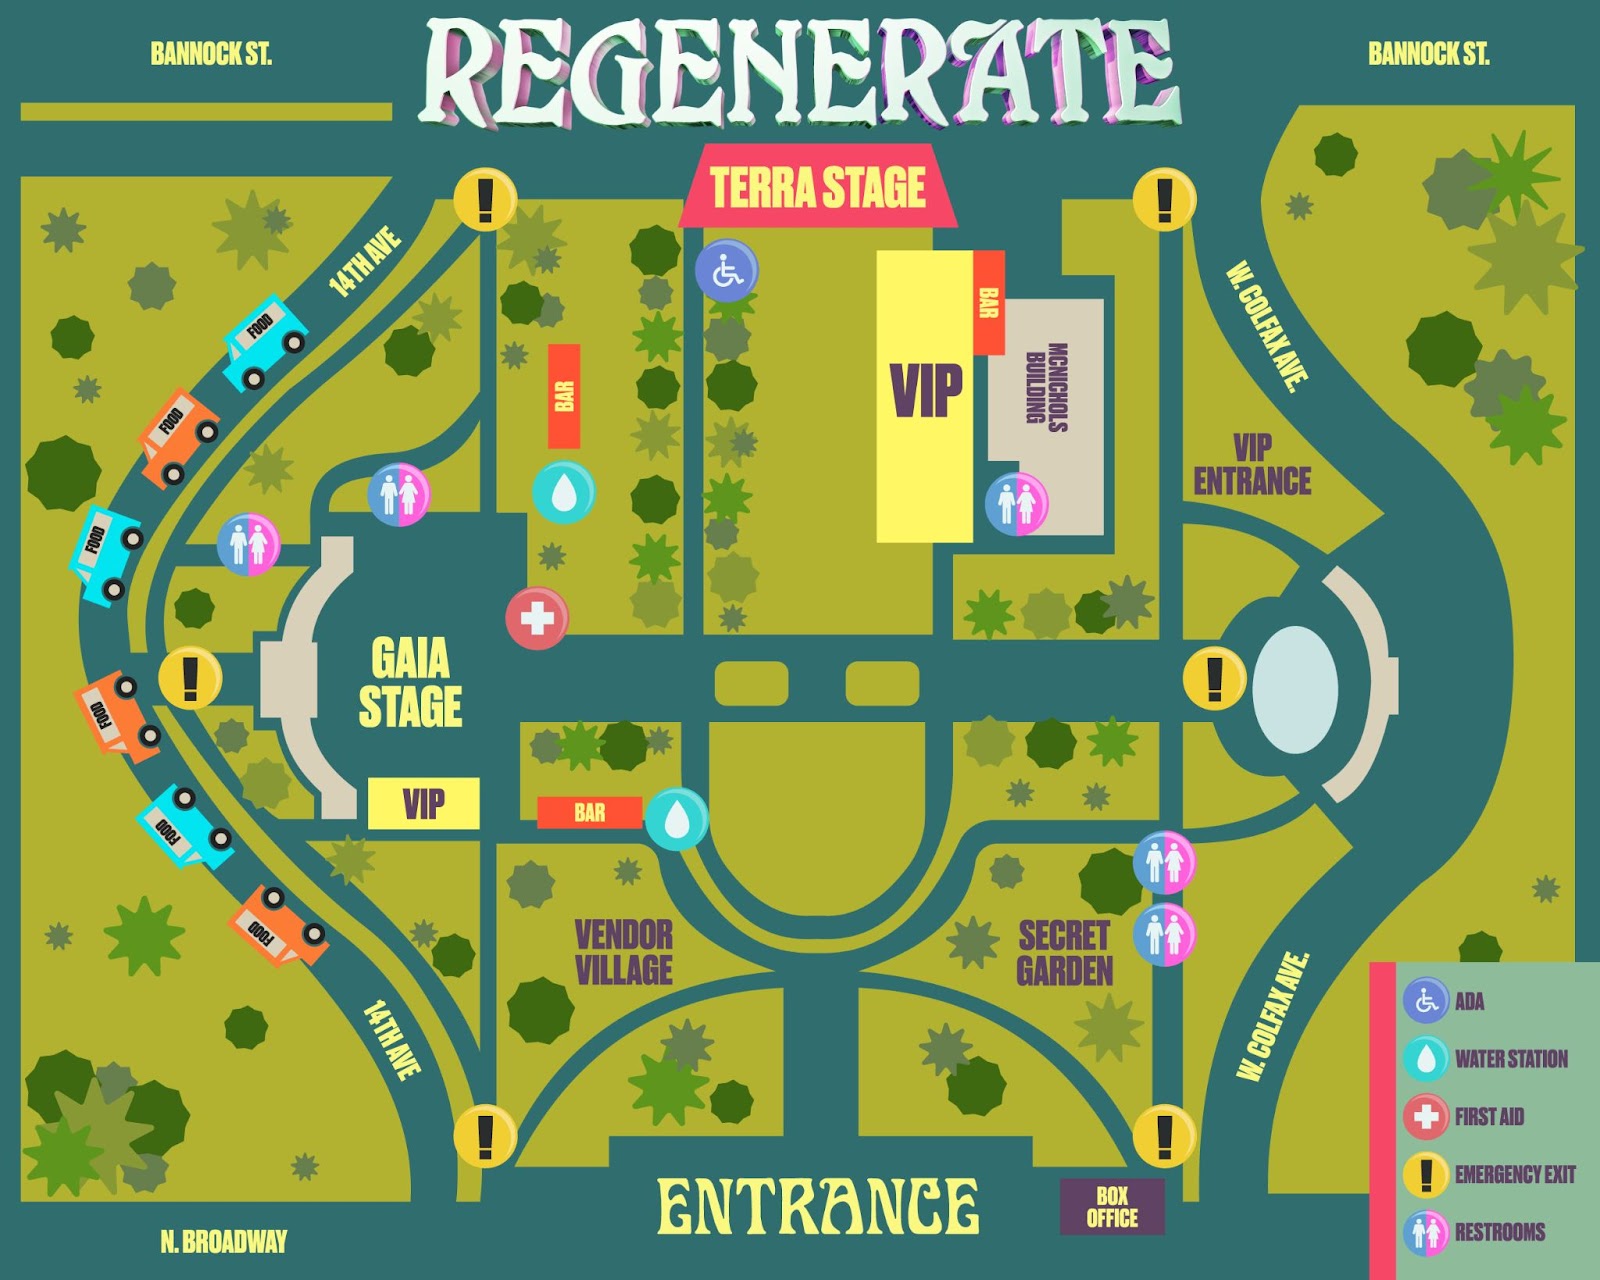 Regenerate venue map